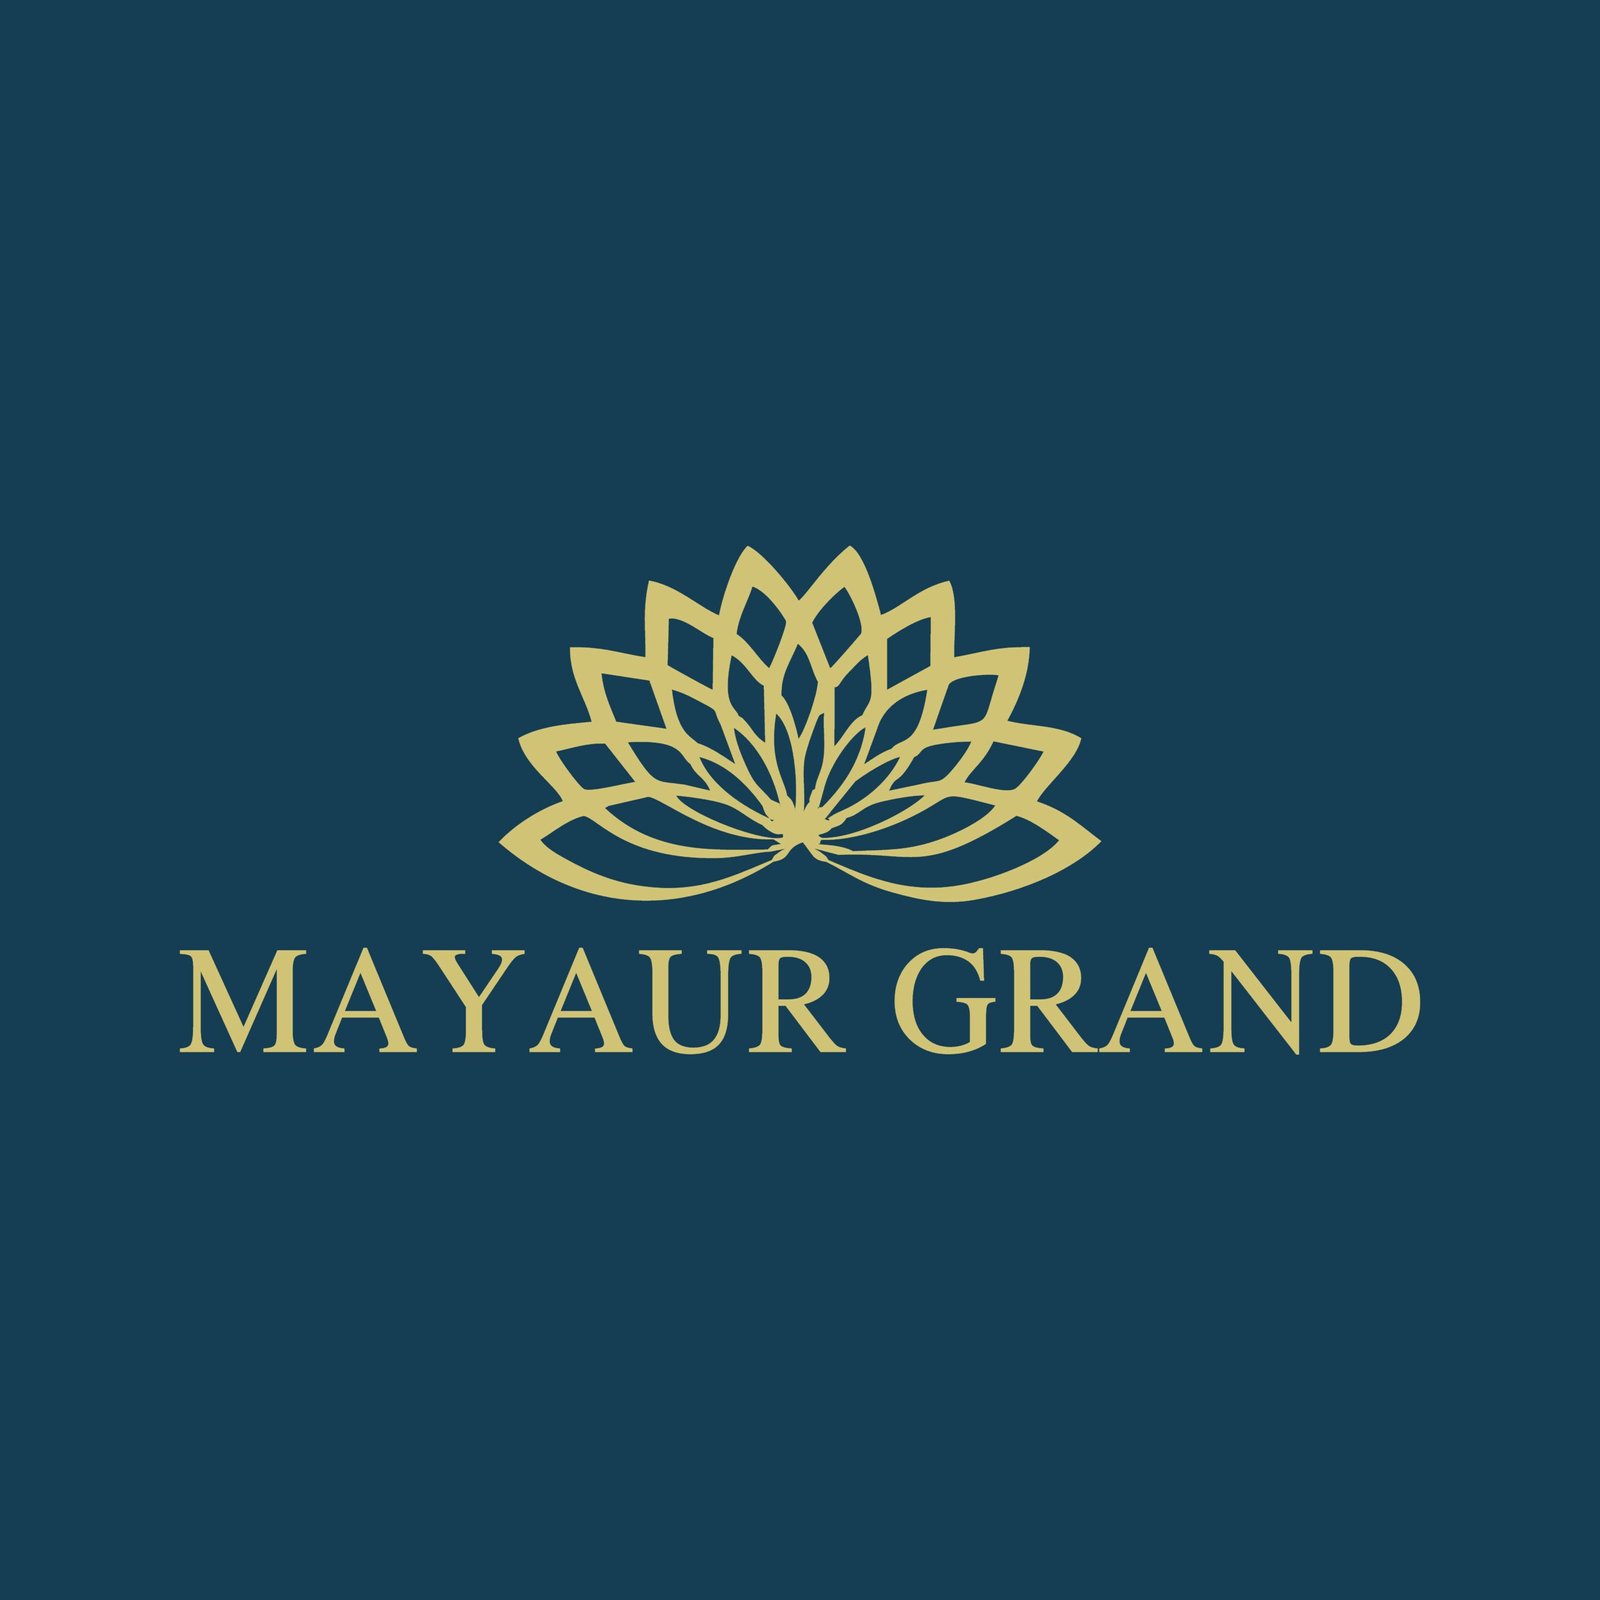 Mayur grand